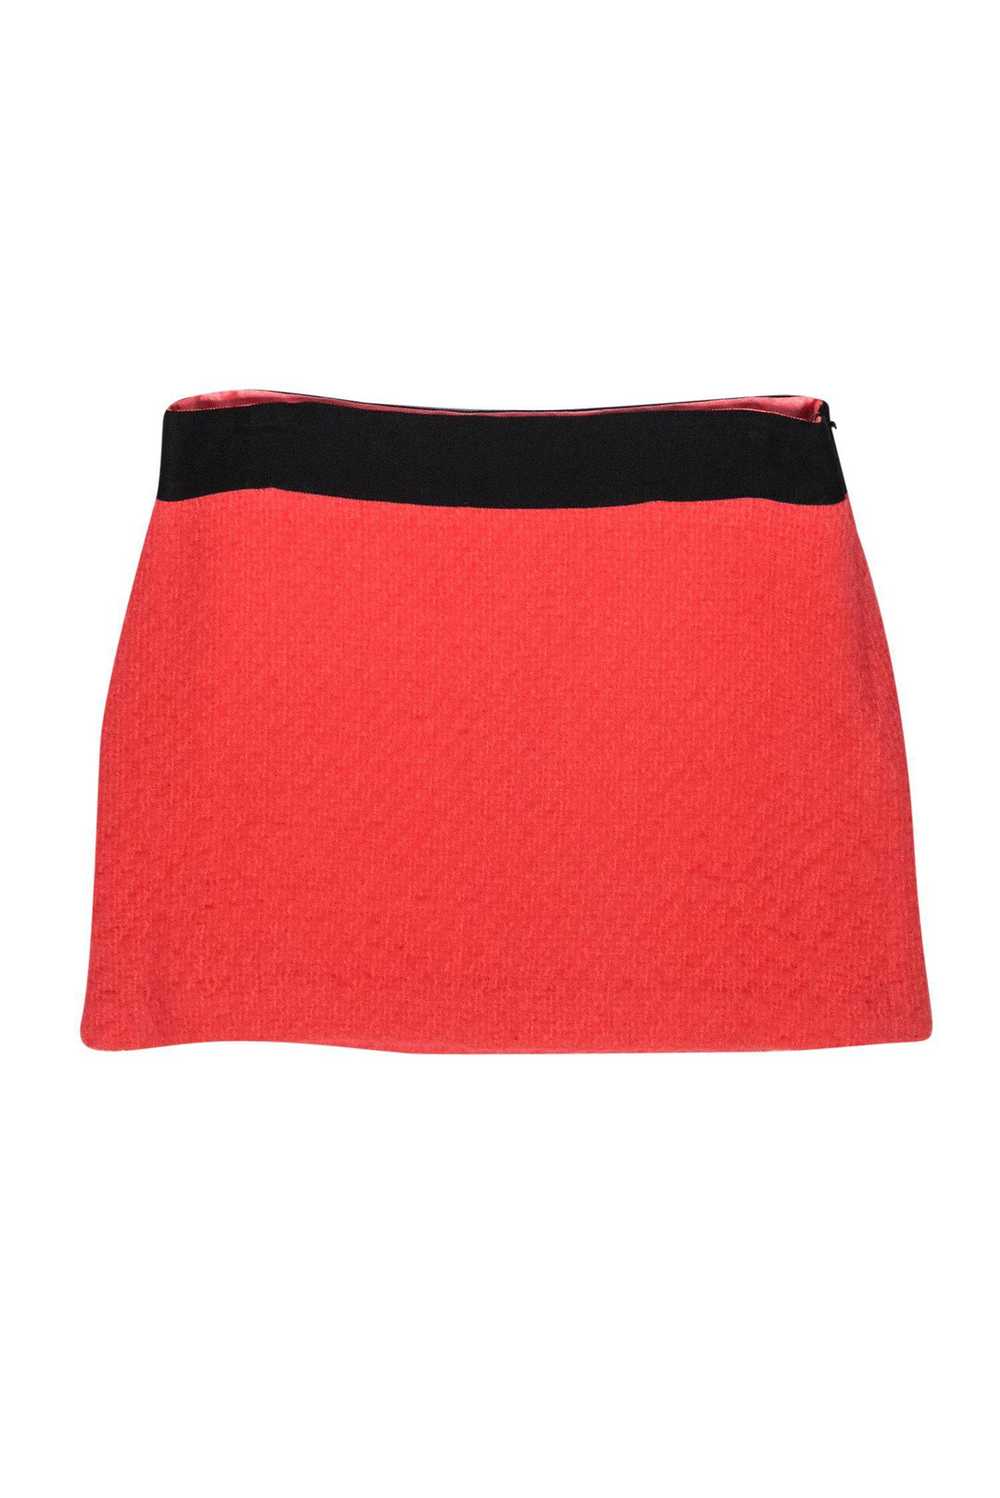 Milly - Pink Tweed Wool Miniskirt Sz 4 - image 2